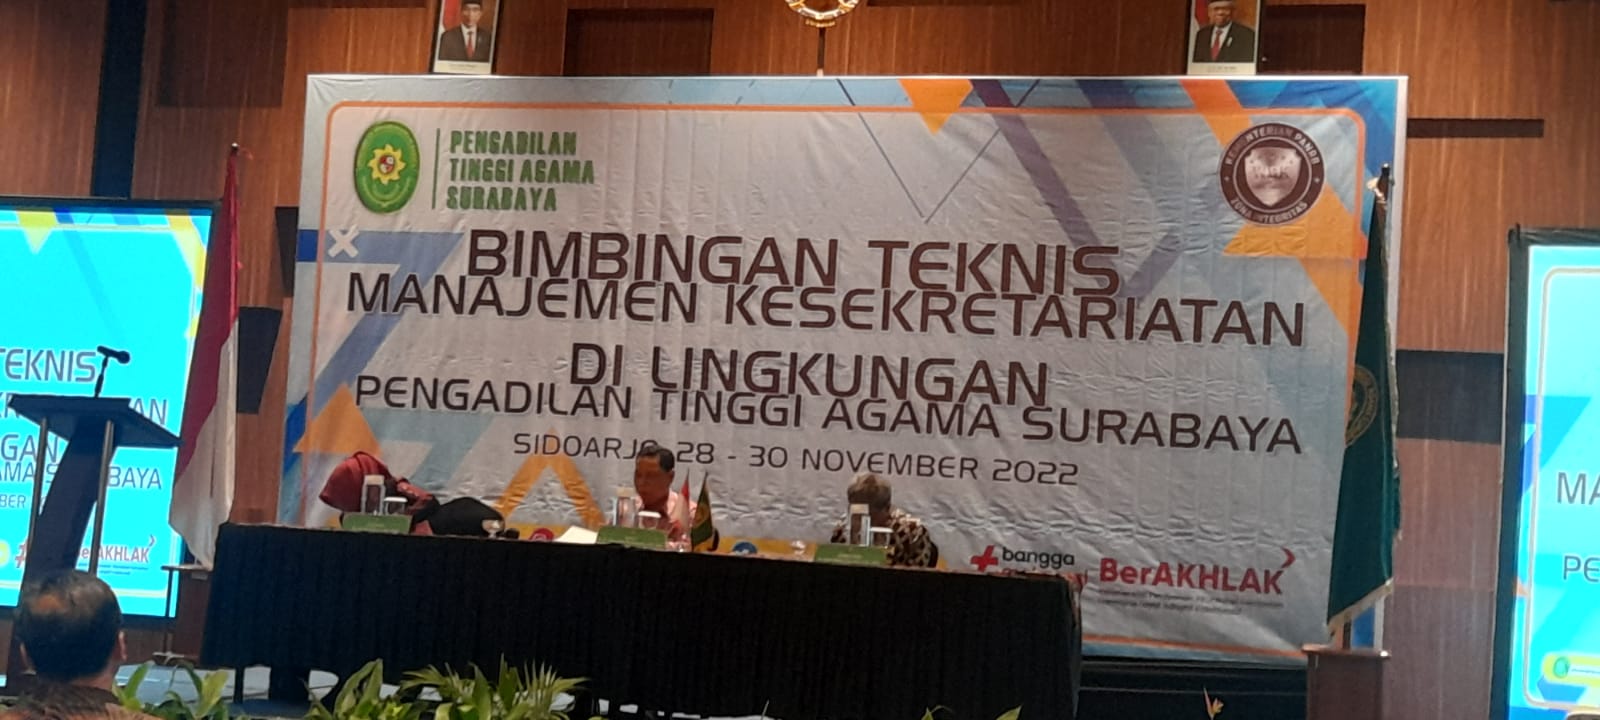 PA Surabaya Ikuti Bimbingan Teknis Manajemen Kesekretariatan di Lingkungan Pengadilan Tinggi Agama Surabaya Tahun 2022